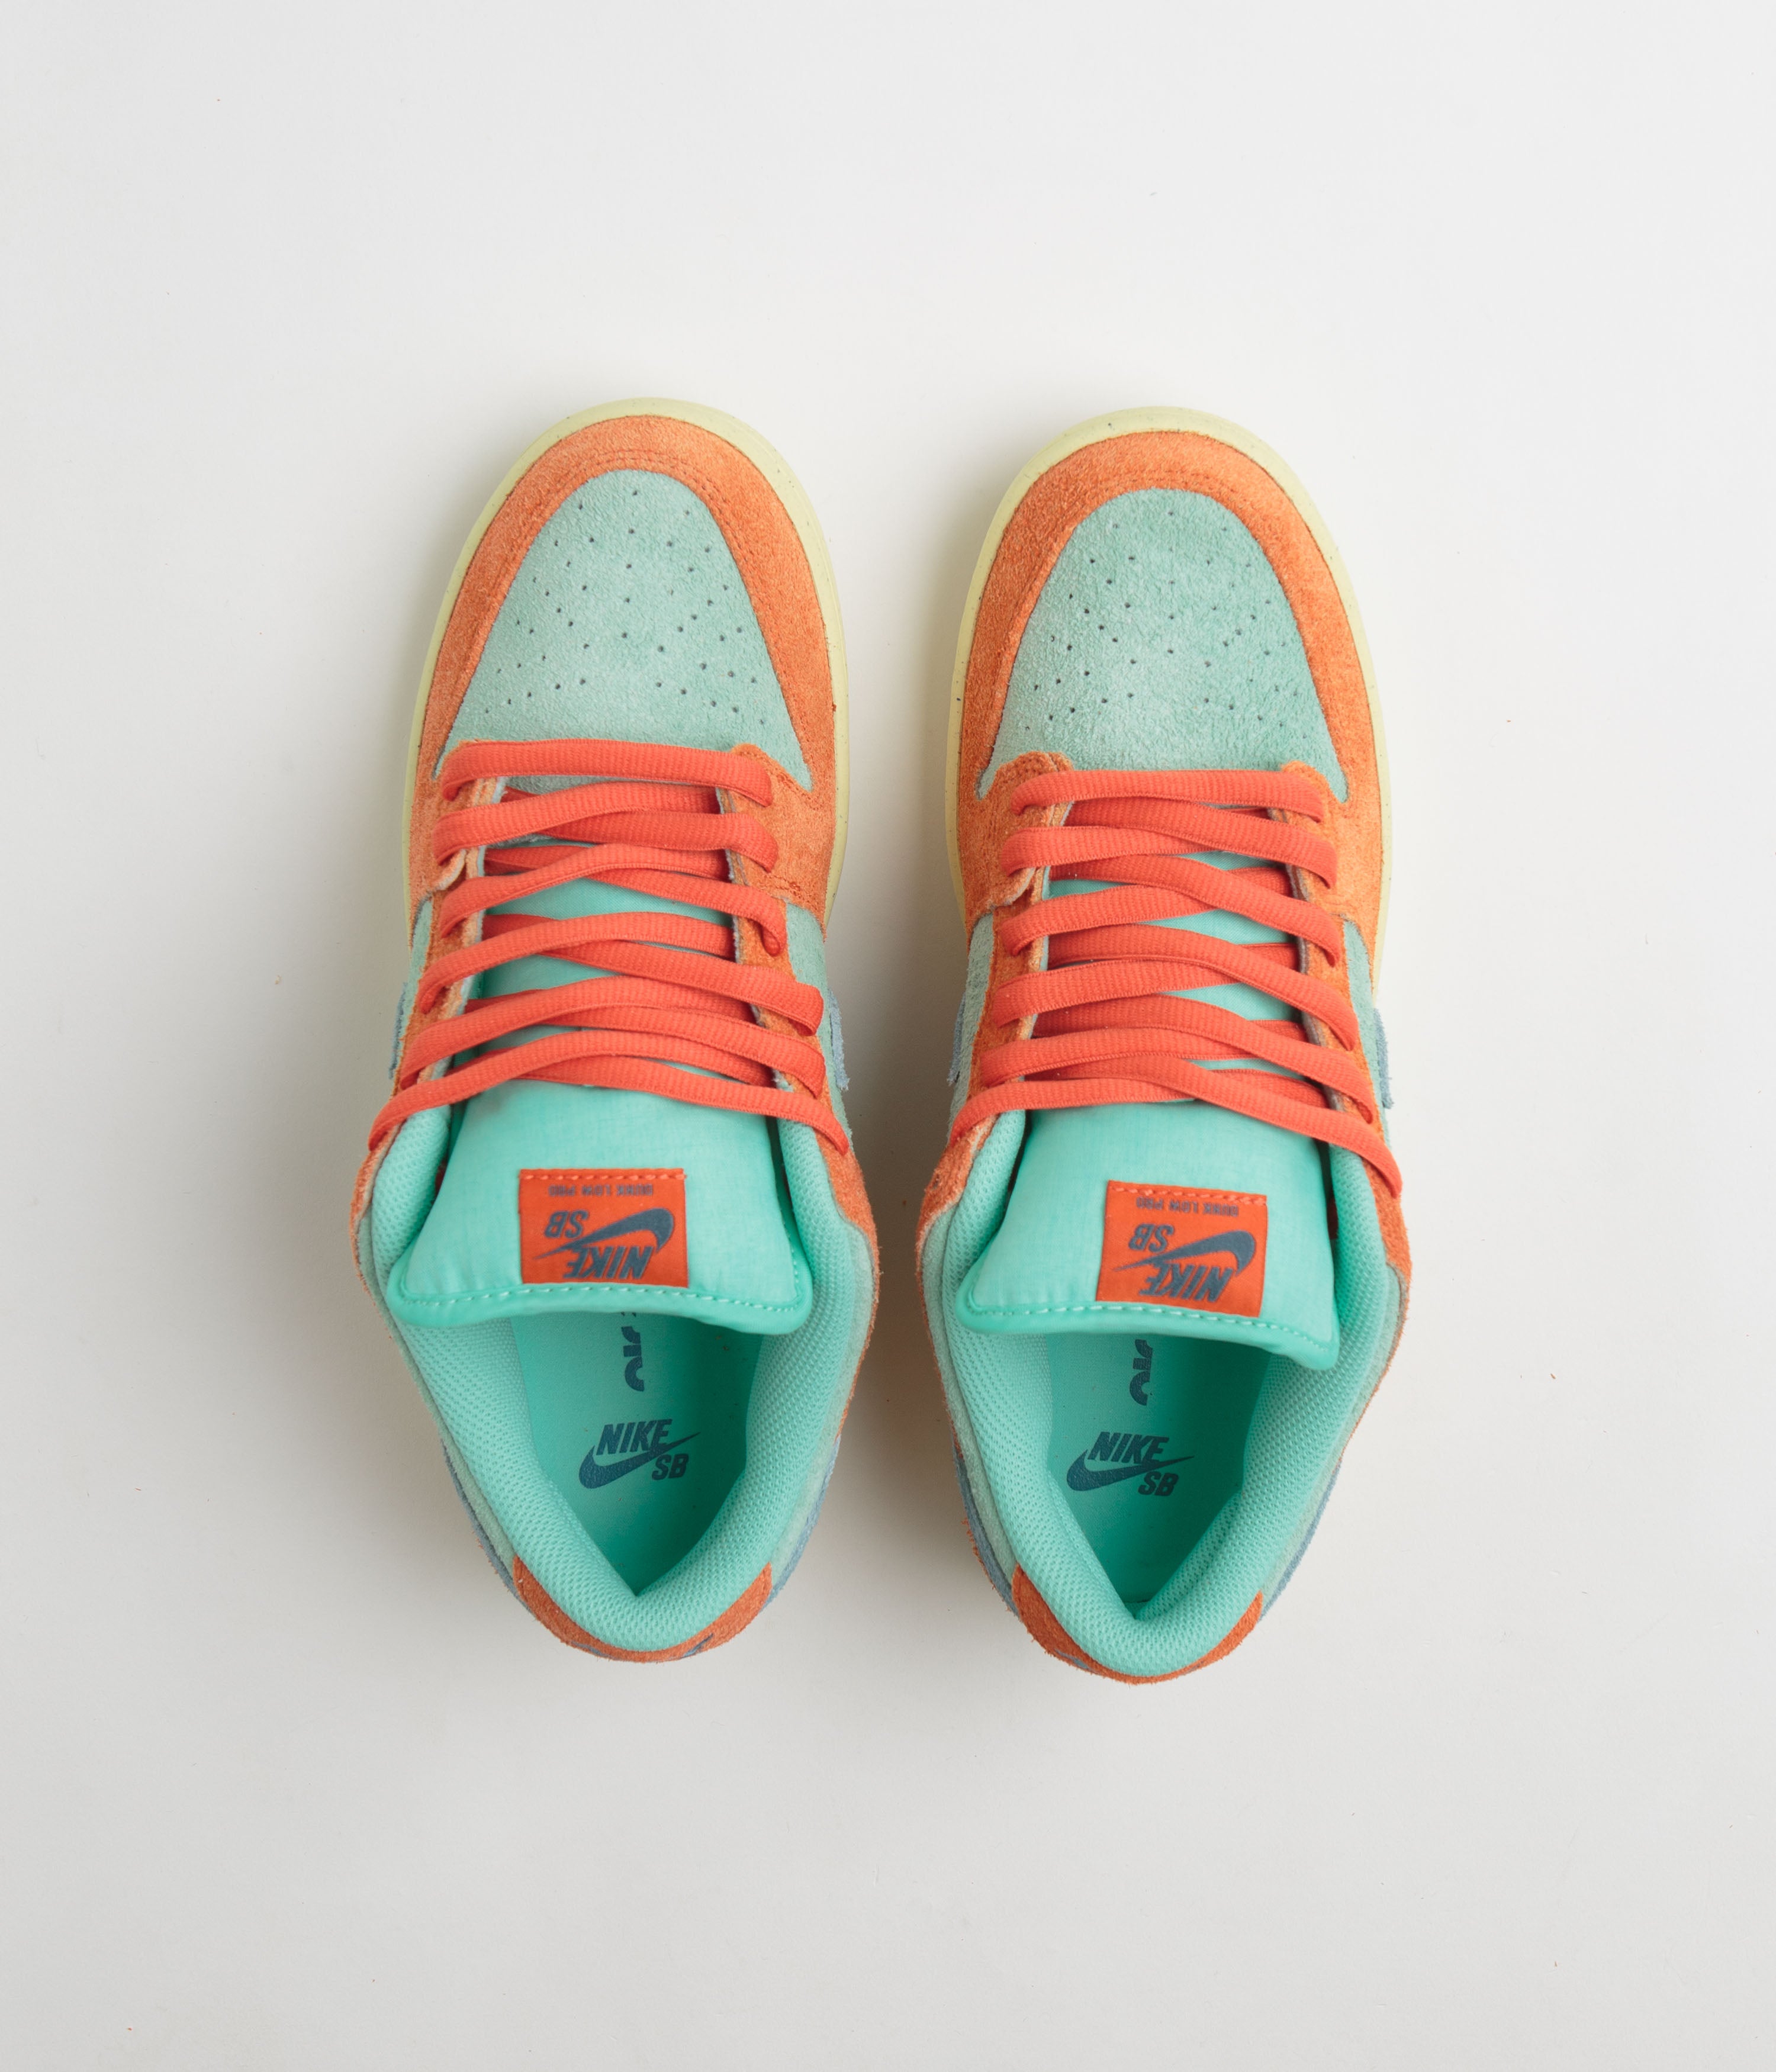 Nike SB Dunk Low Pro Premium Shoes - Orange / Noise Aqua - Emerald Ris